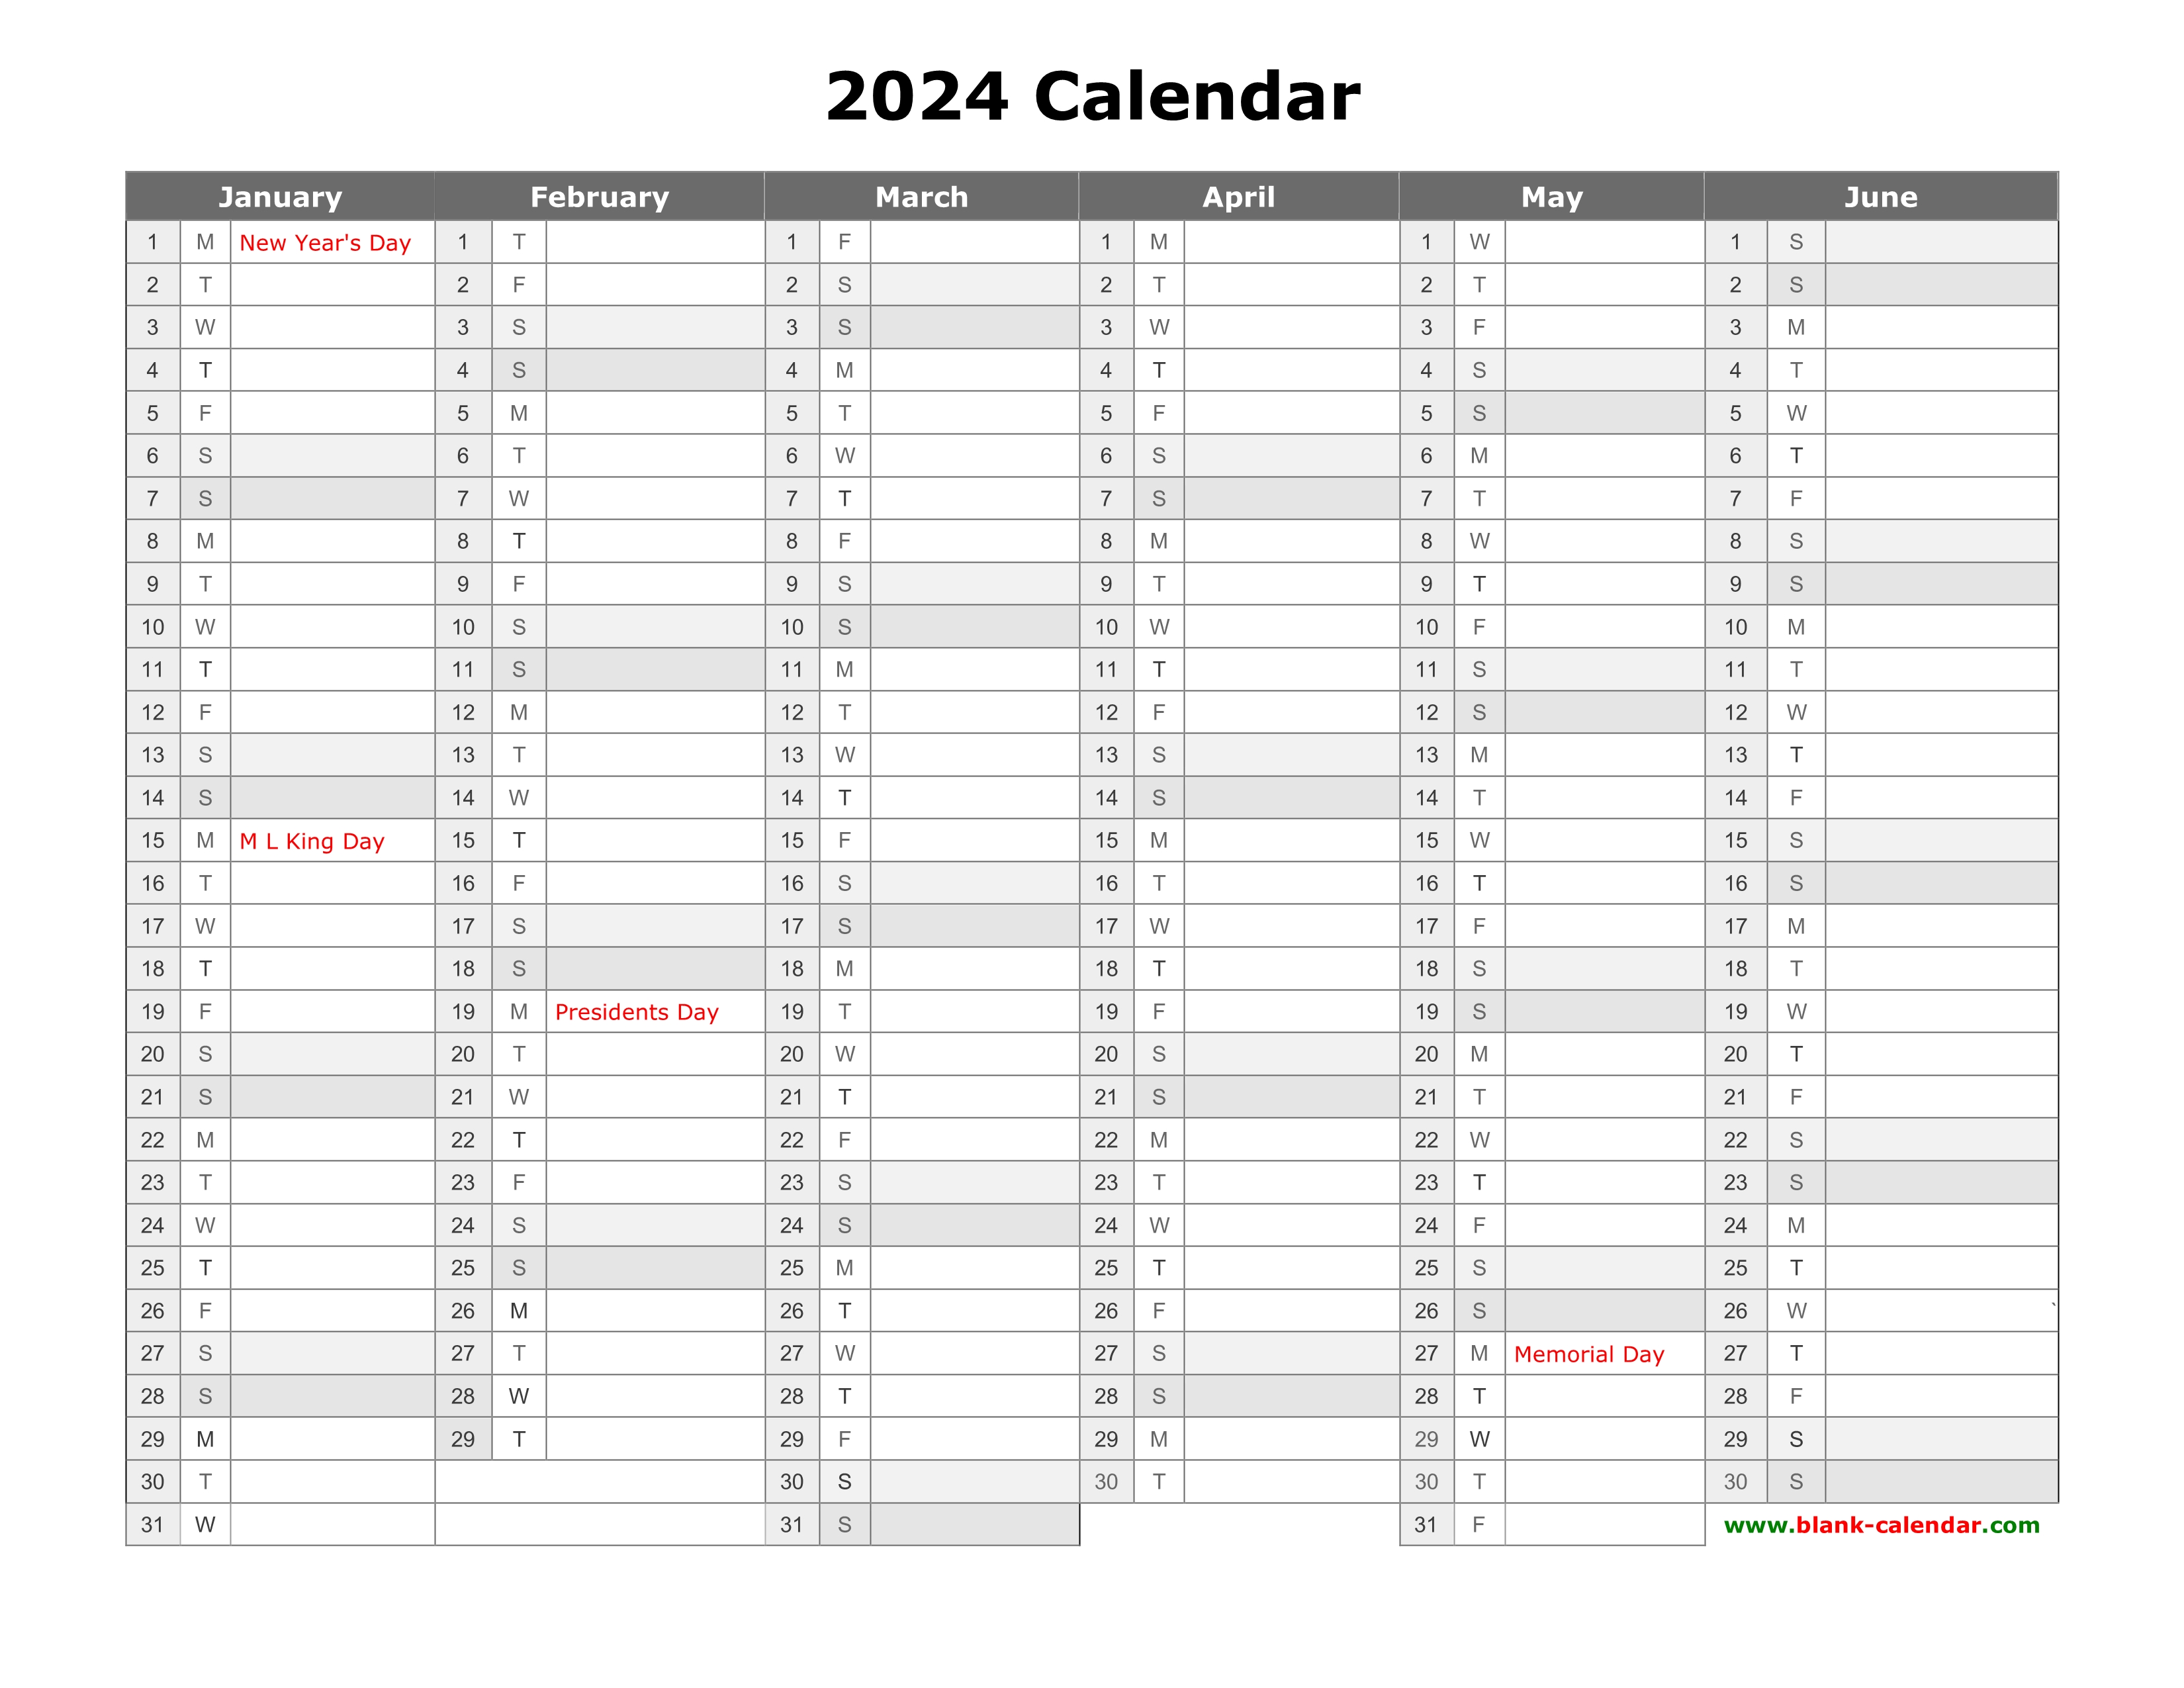 2024 Half Year Calendar Printable 2024 CALENDAR PRINTABLE